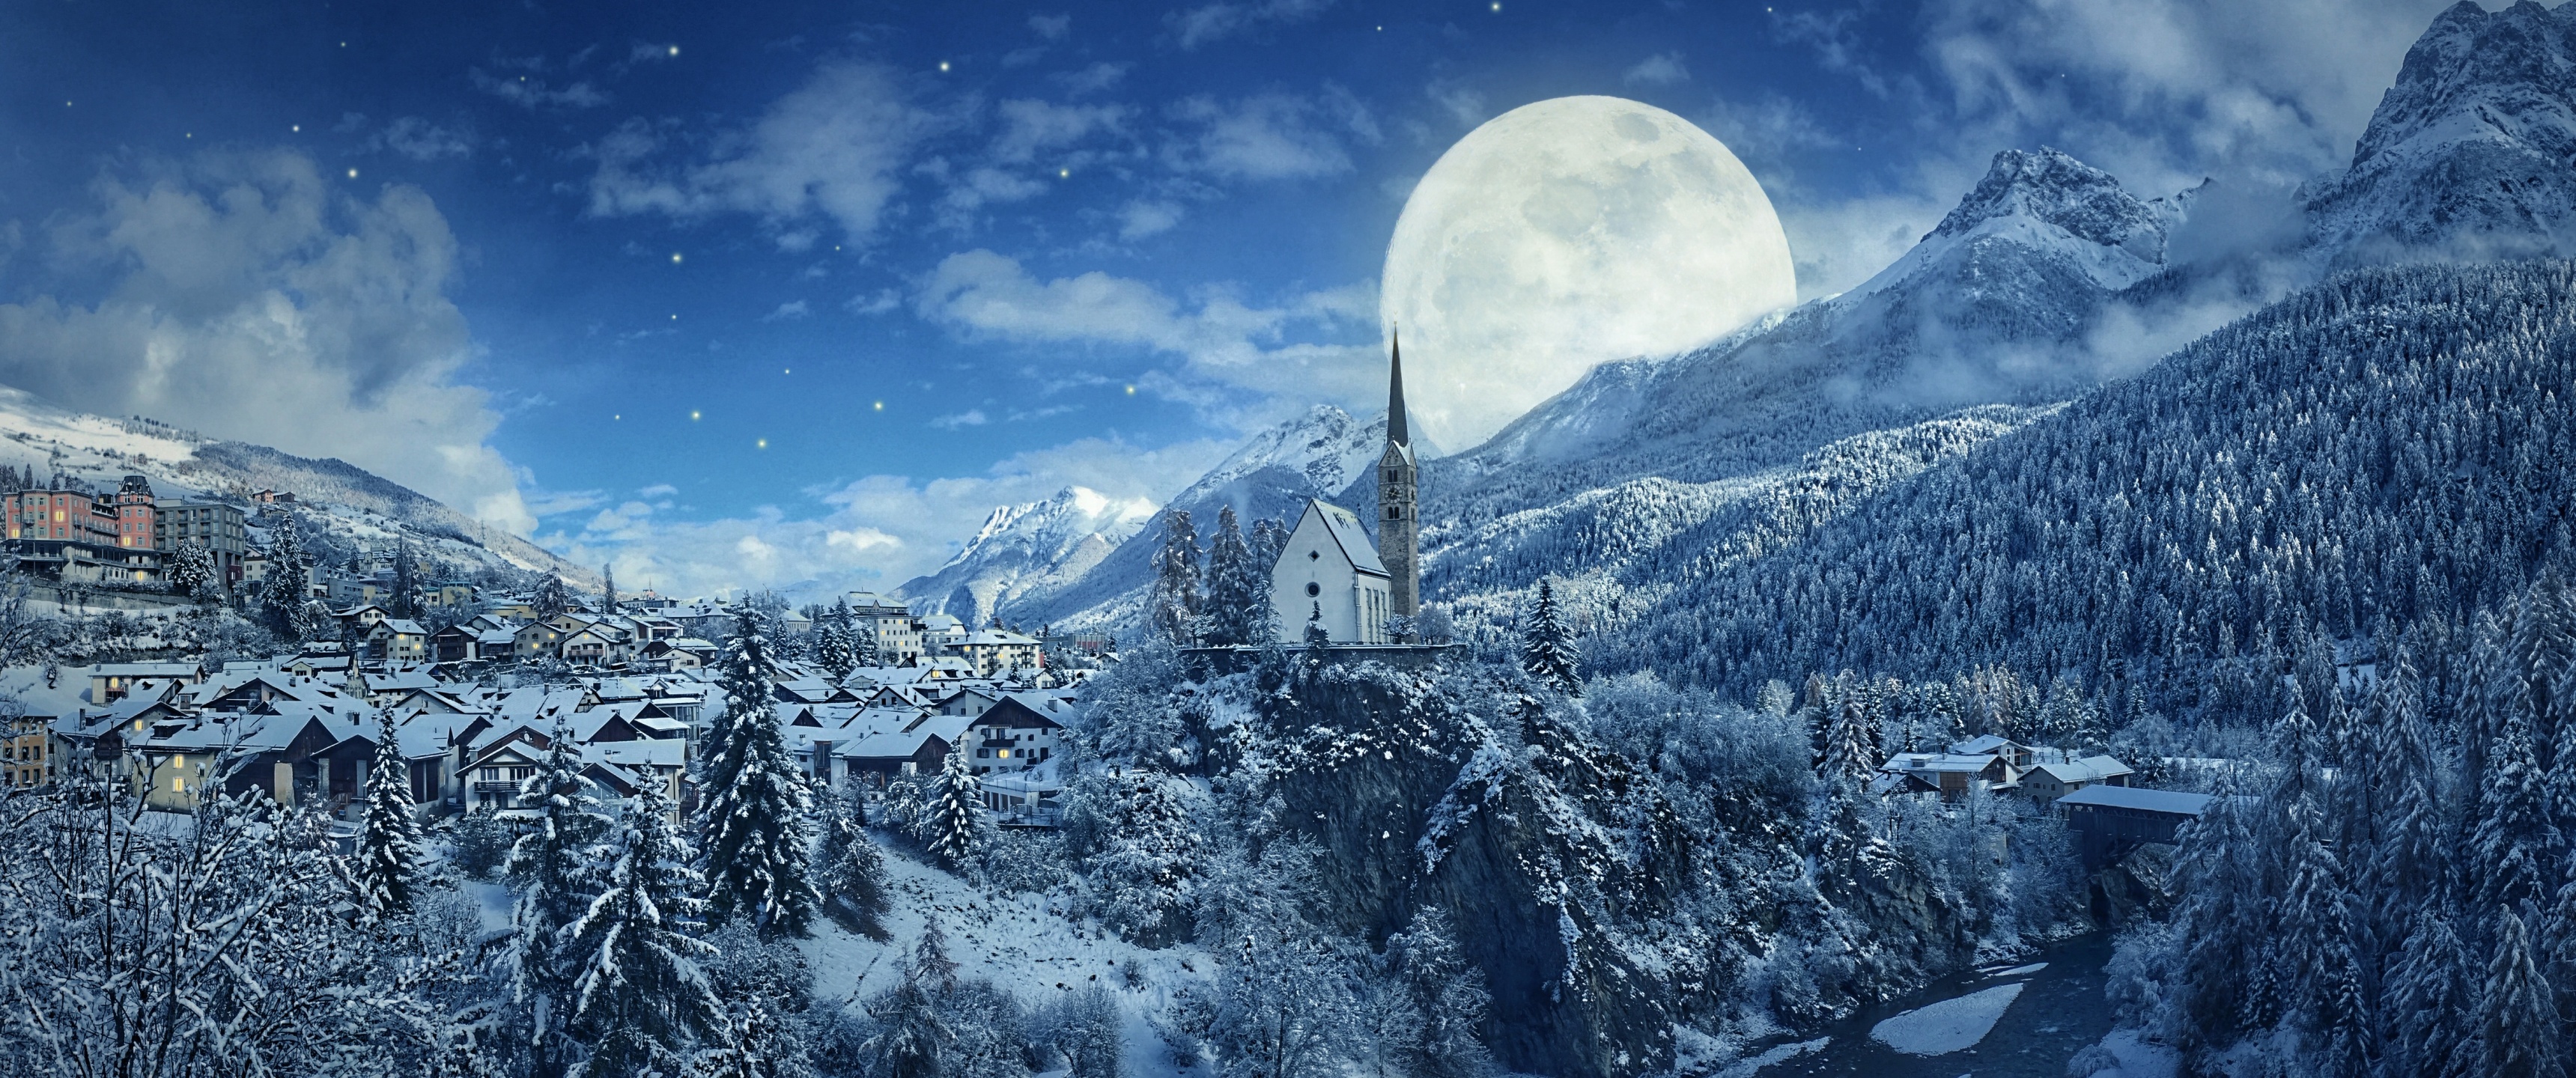 Winter Wallpaper 4K, Moon, Frozen, Forest, Village, Snowfall, 5K, Nature